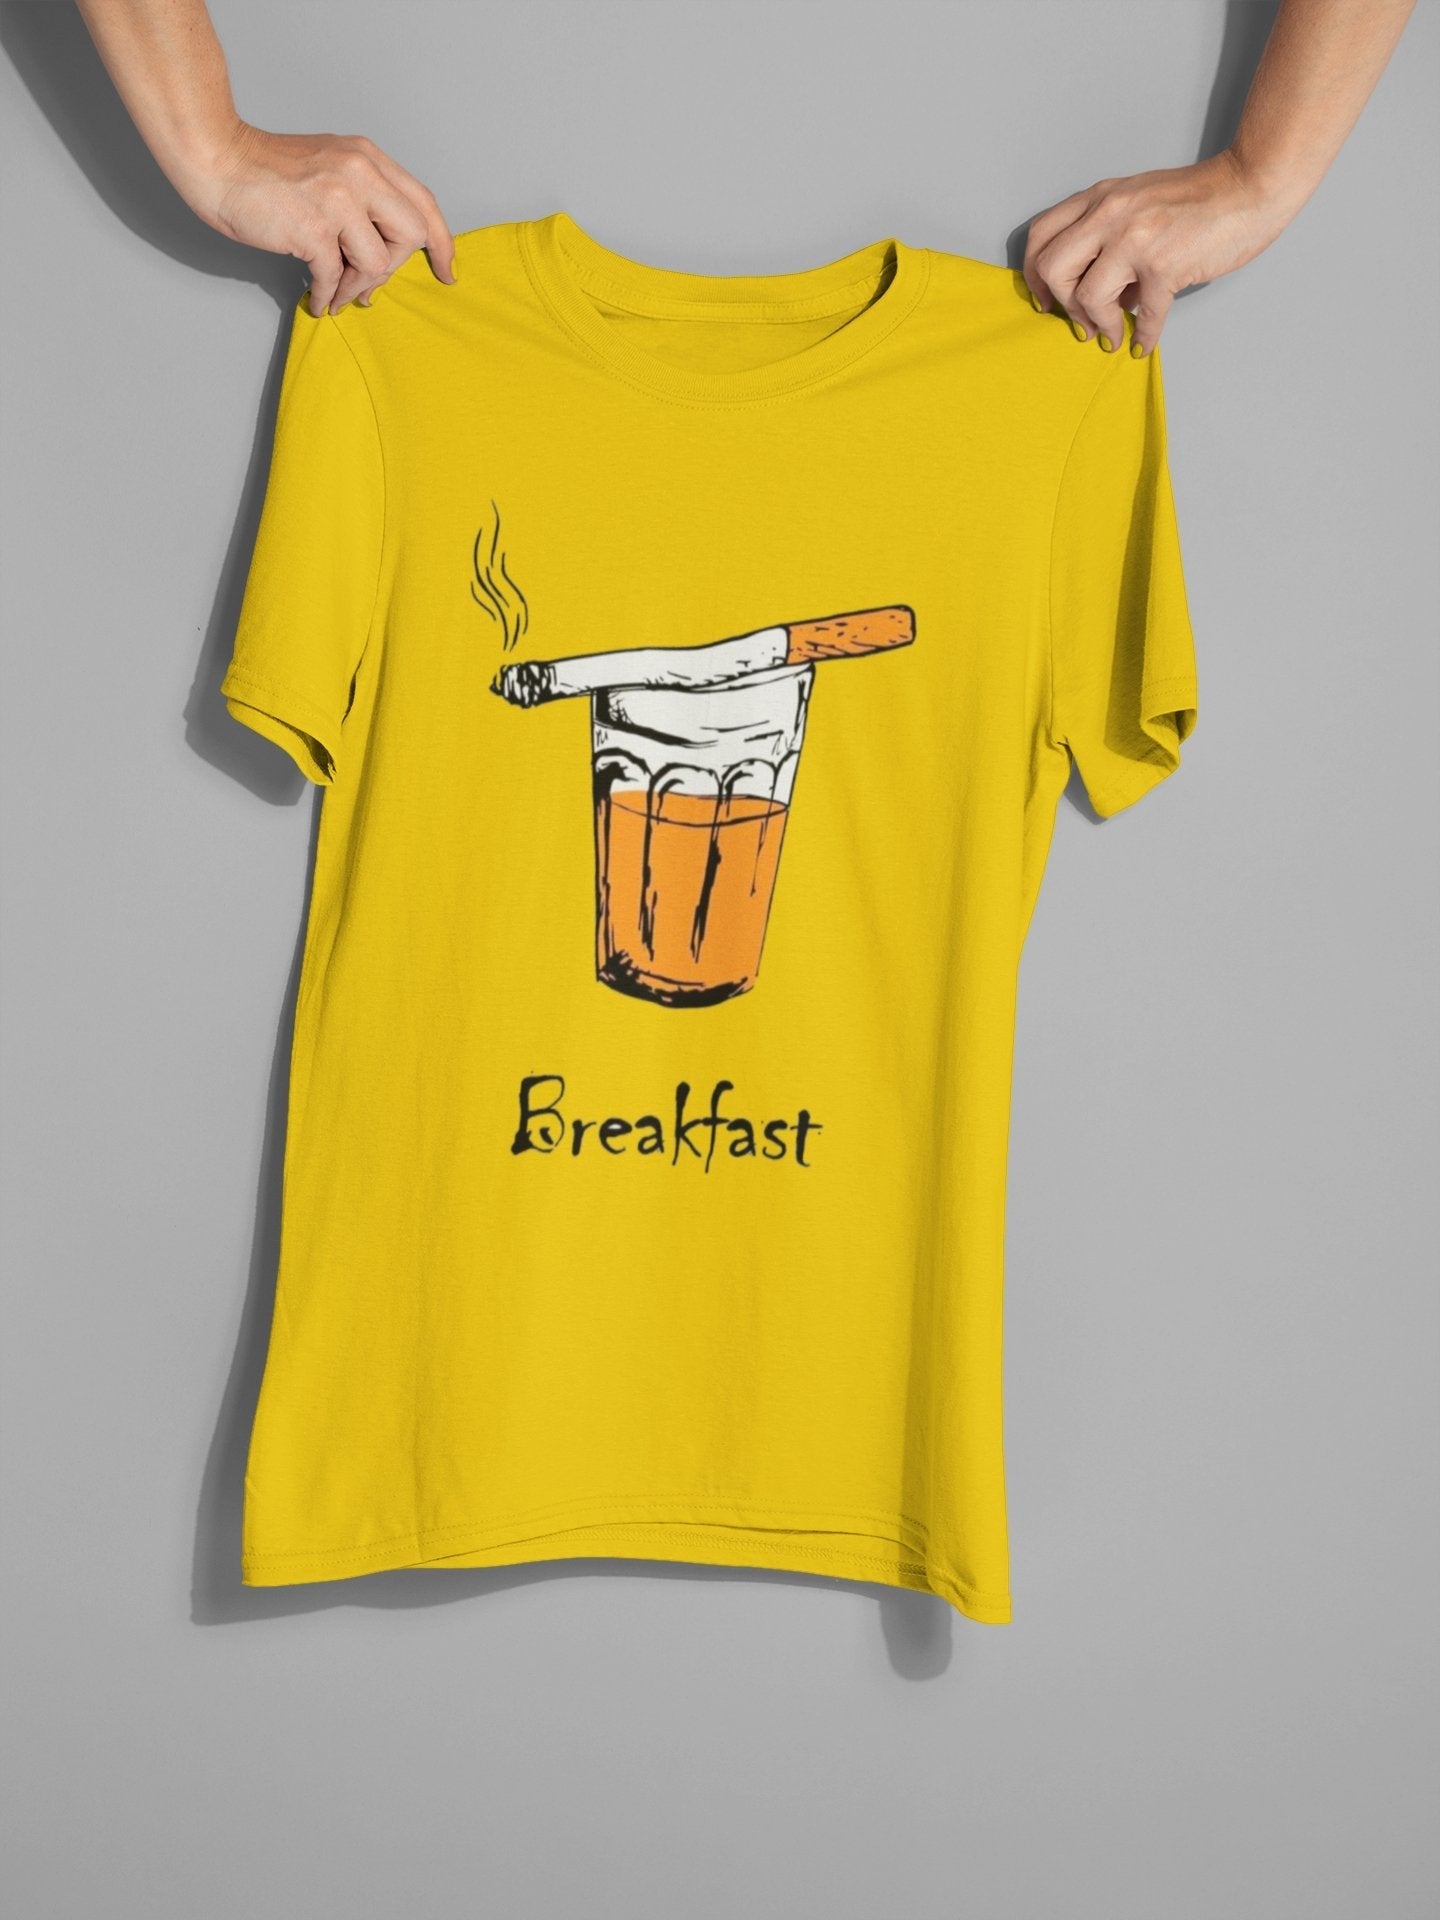 Chai Sutta Breakfast Mens Tshirt - Insane Tees